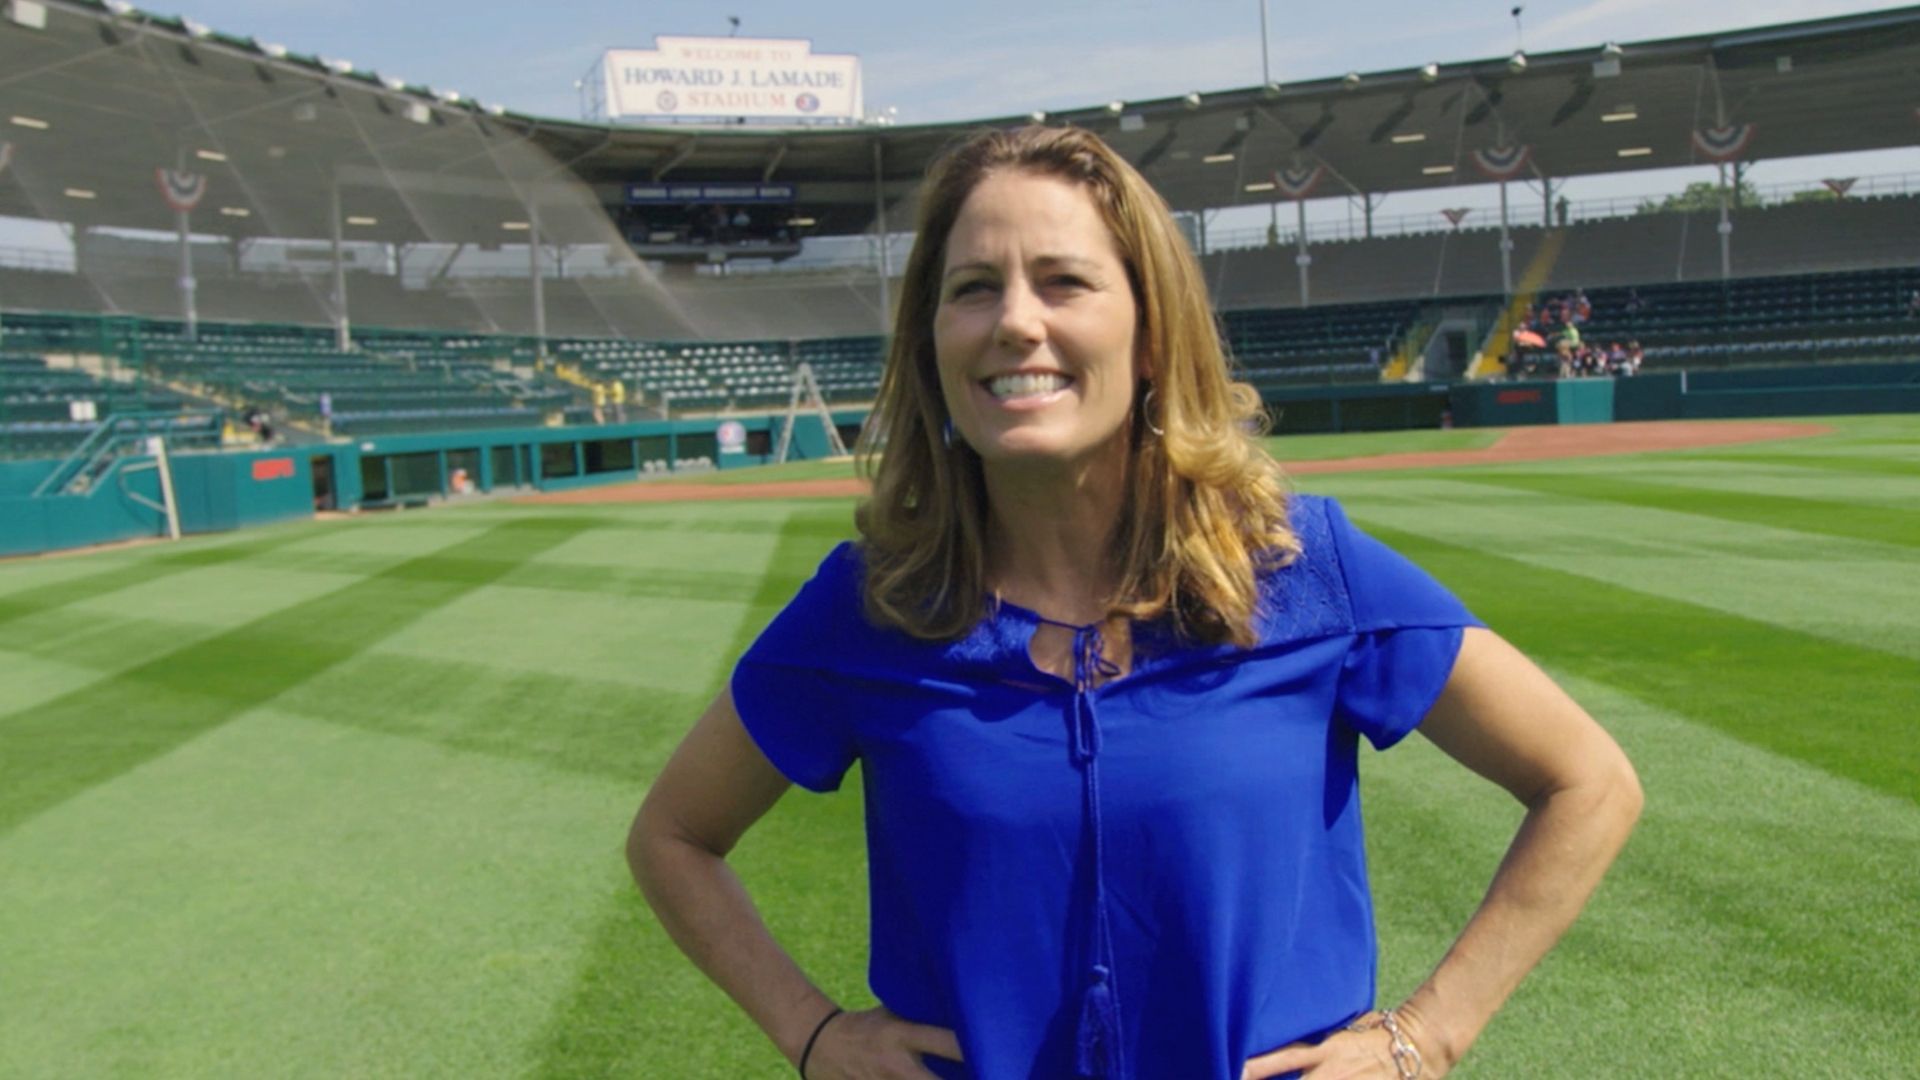 Foudy's Finds Little League World Series full of fun ESPN Video